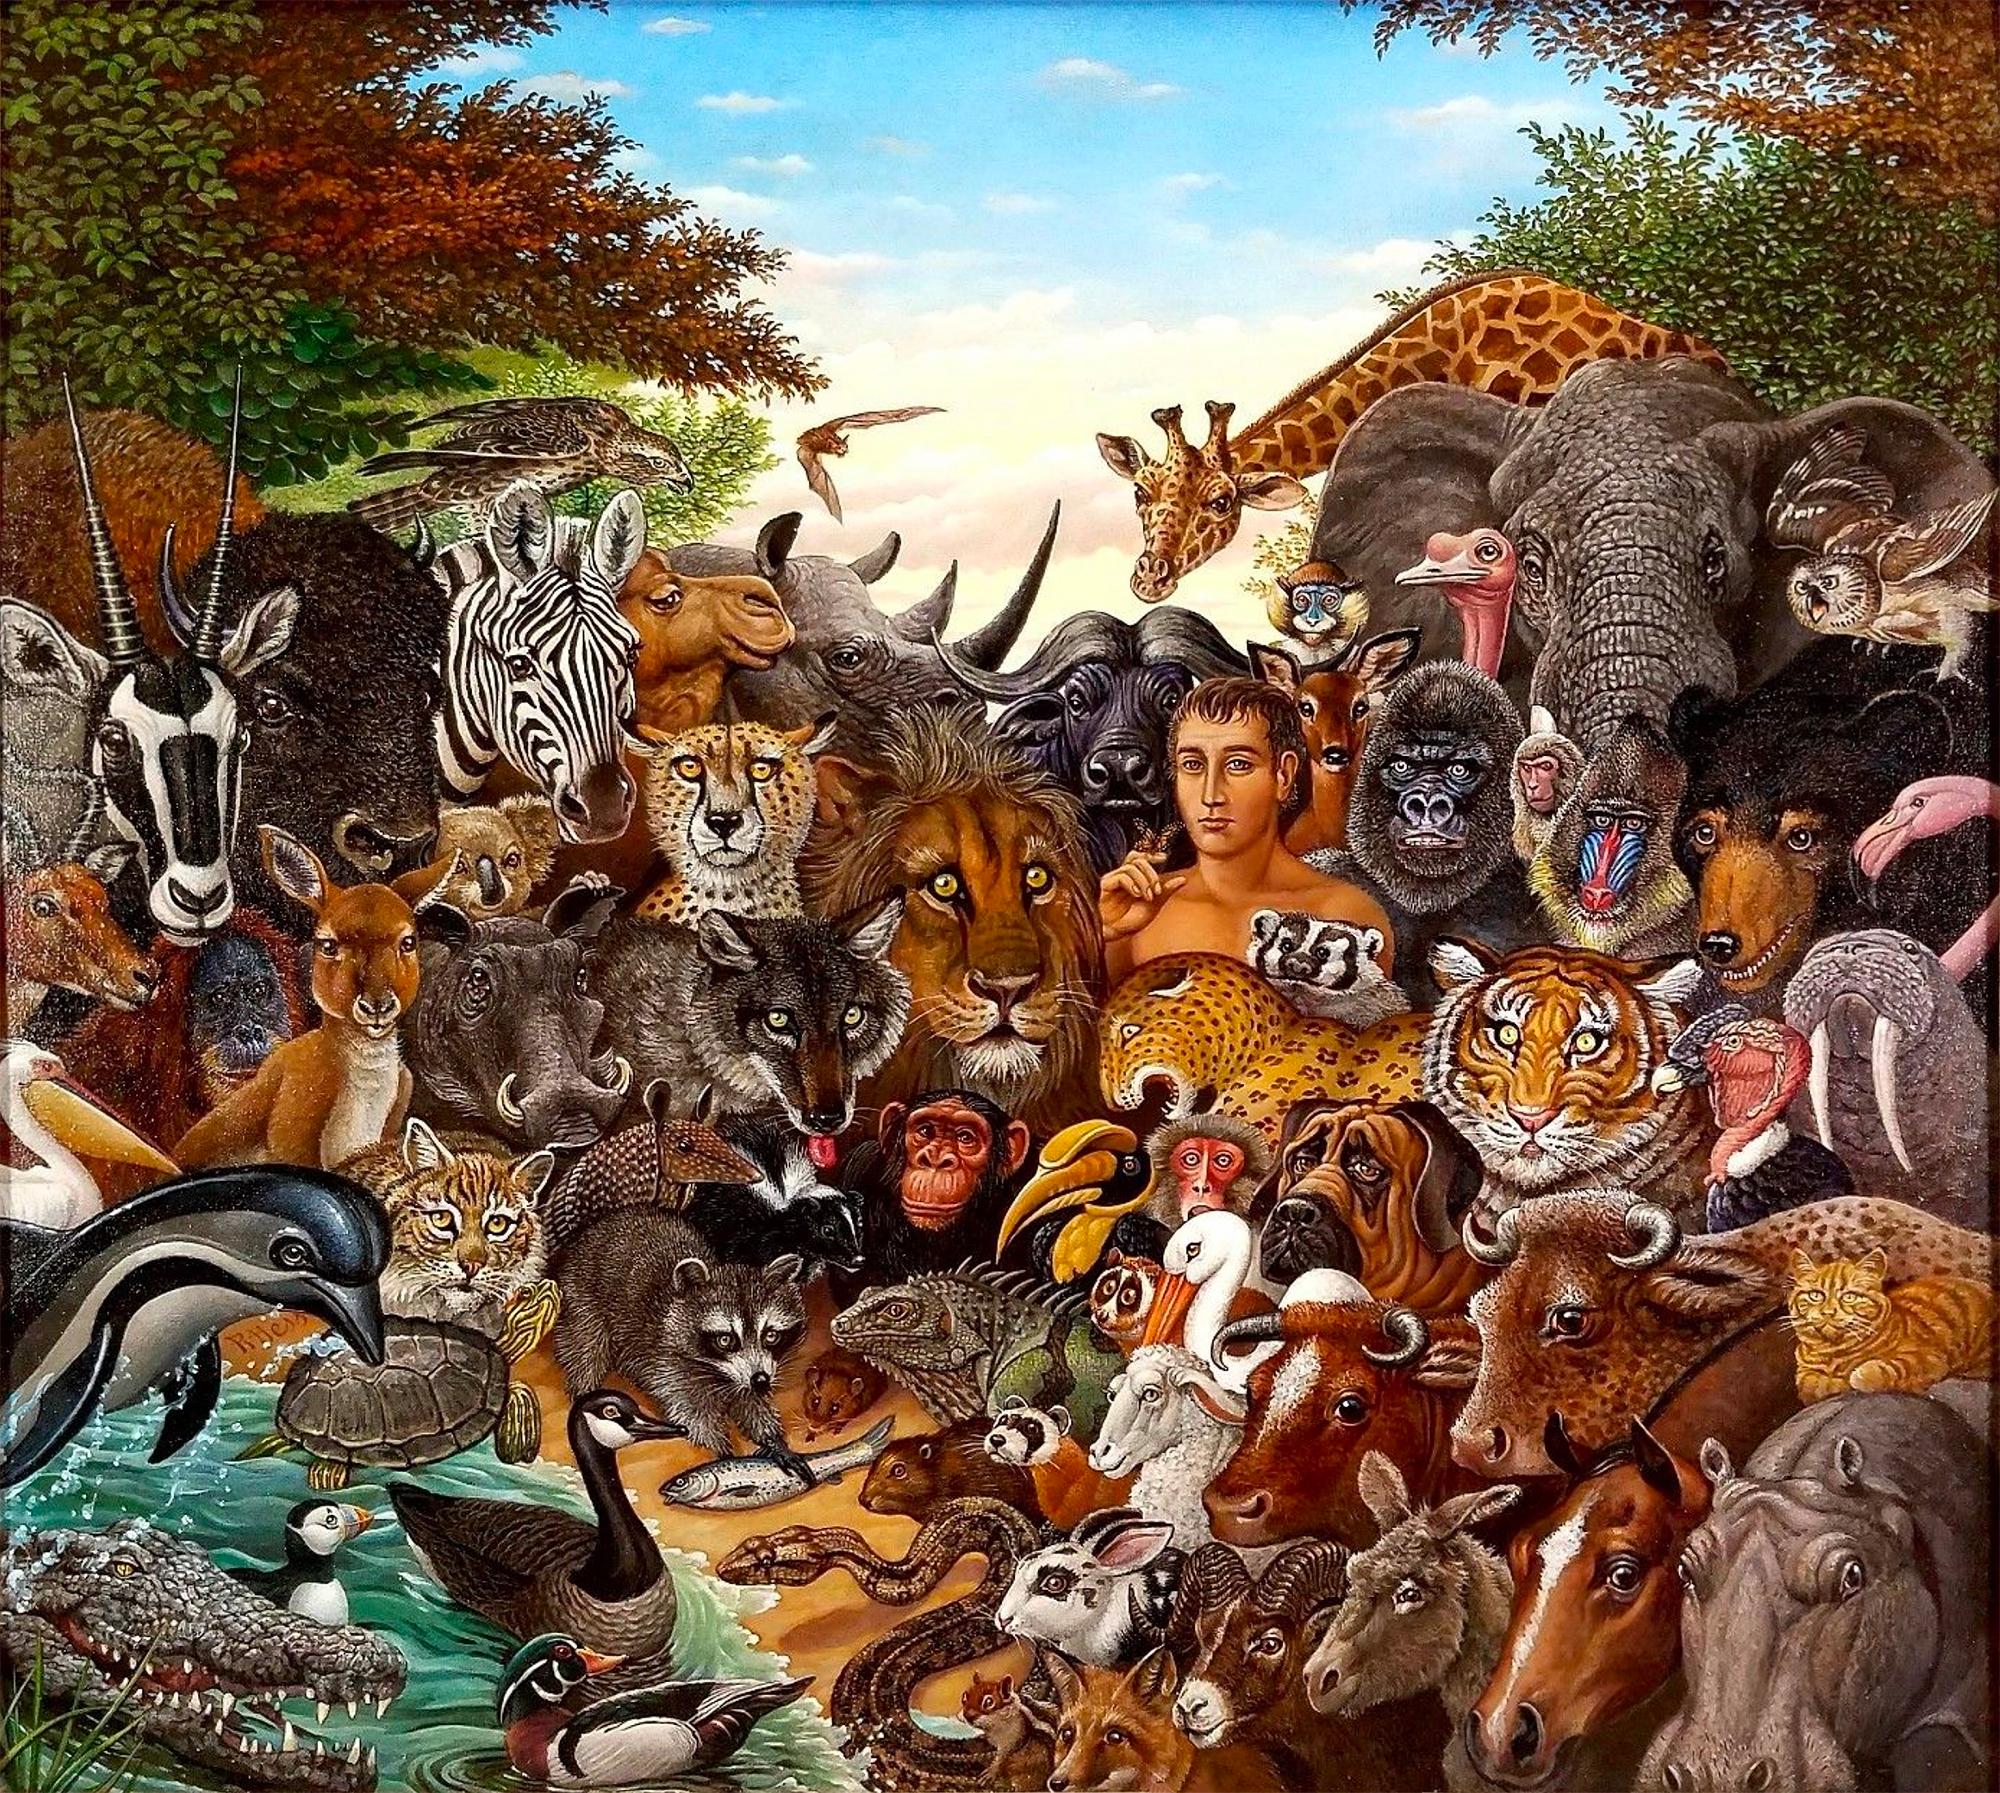 Richard Hess Portrait Painting - Animal Kingdom, Zebra, Buffalo, Lion, Giraffe, Elephant, Monkey, Tiger,  Gorilla